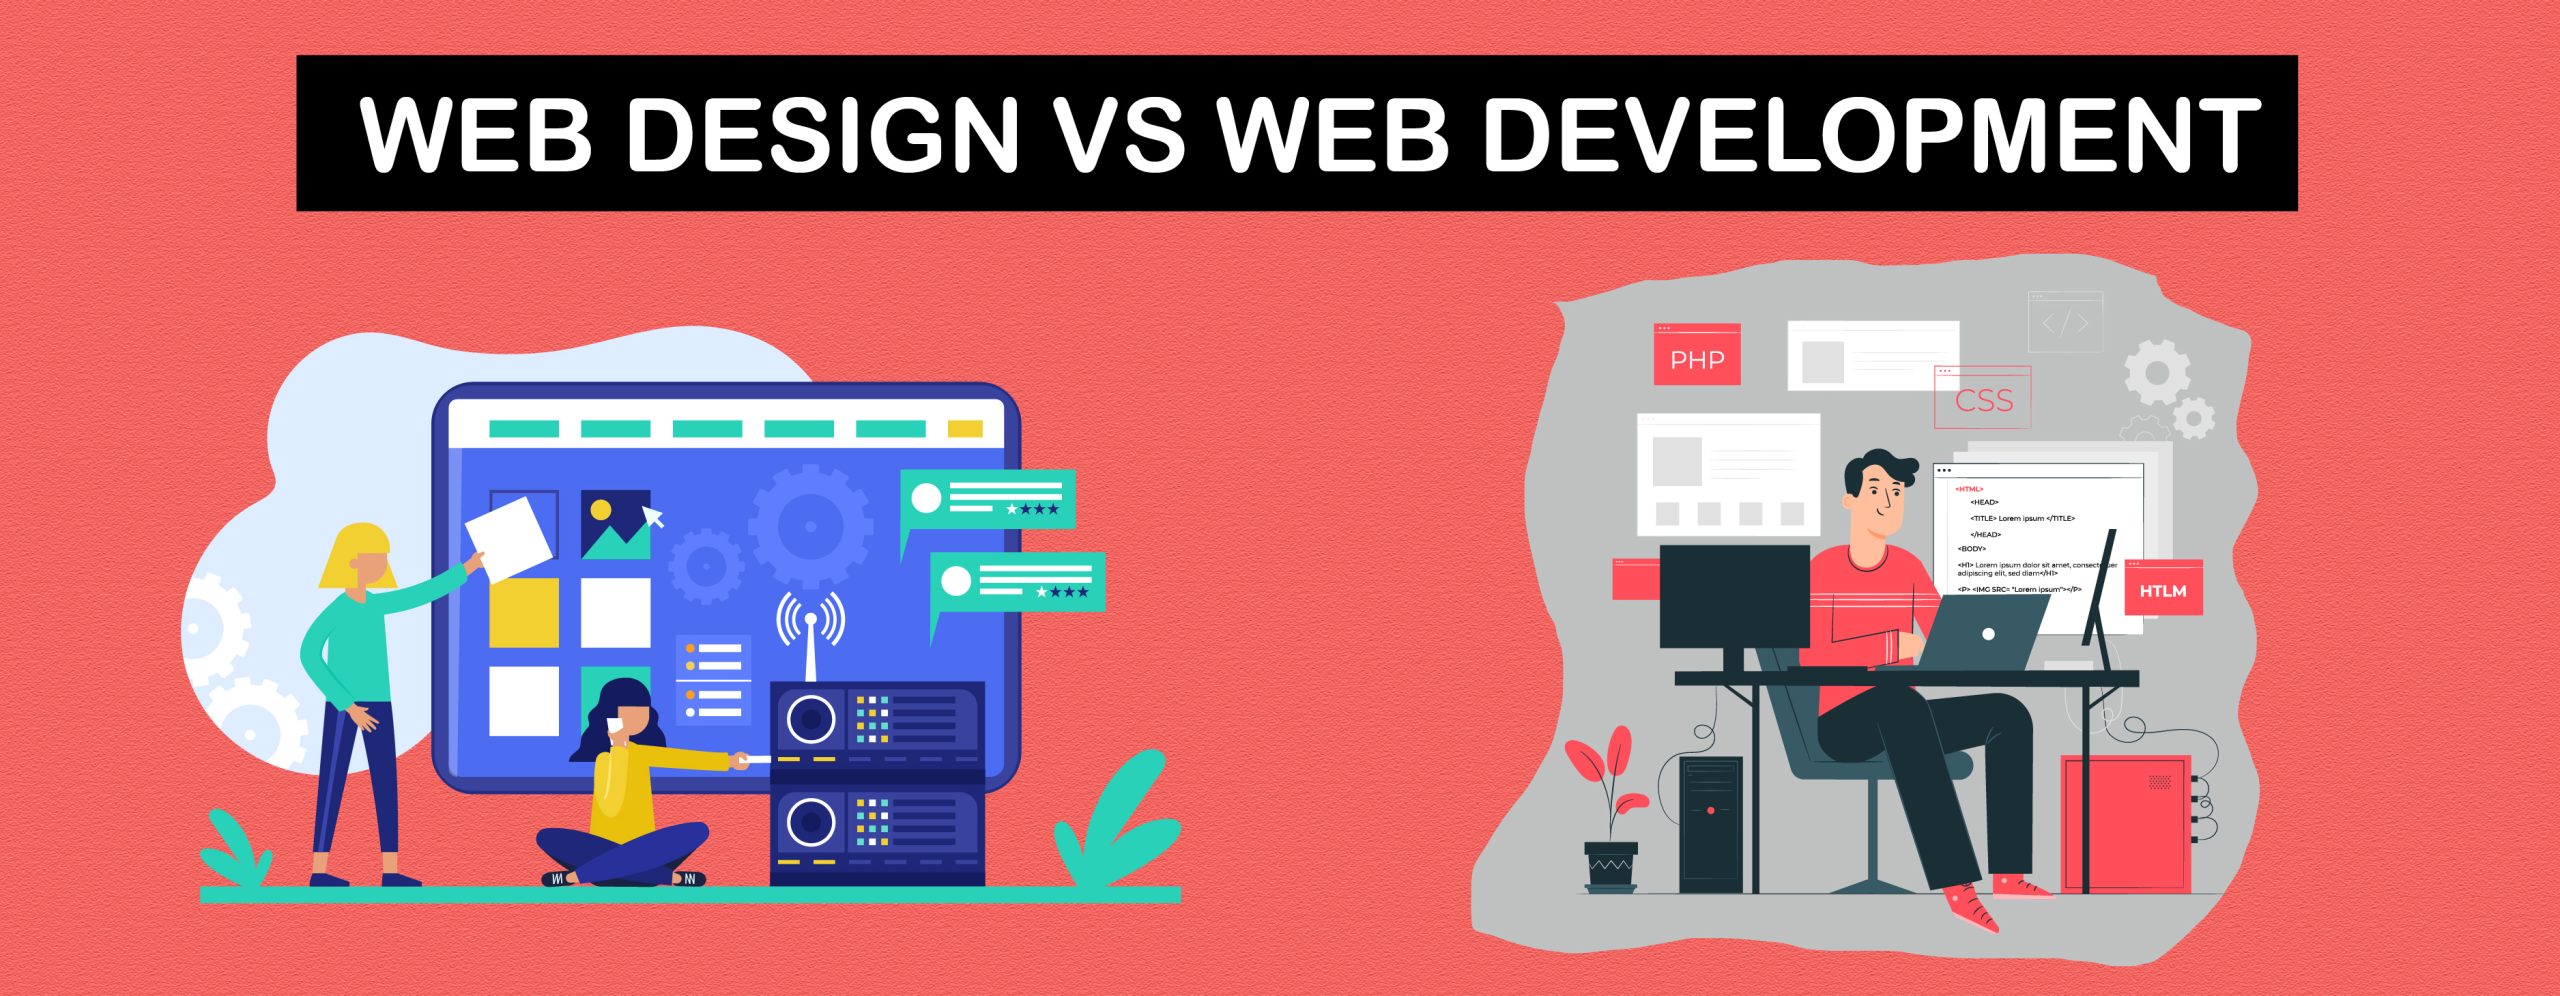 WEB DESIGN VS WEB DEVELOPMENT